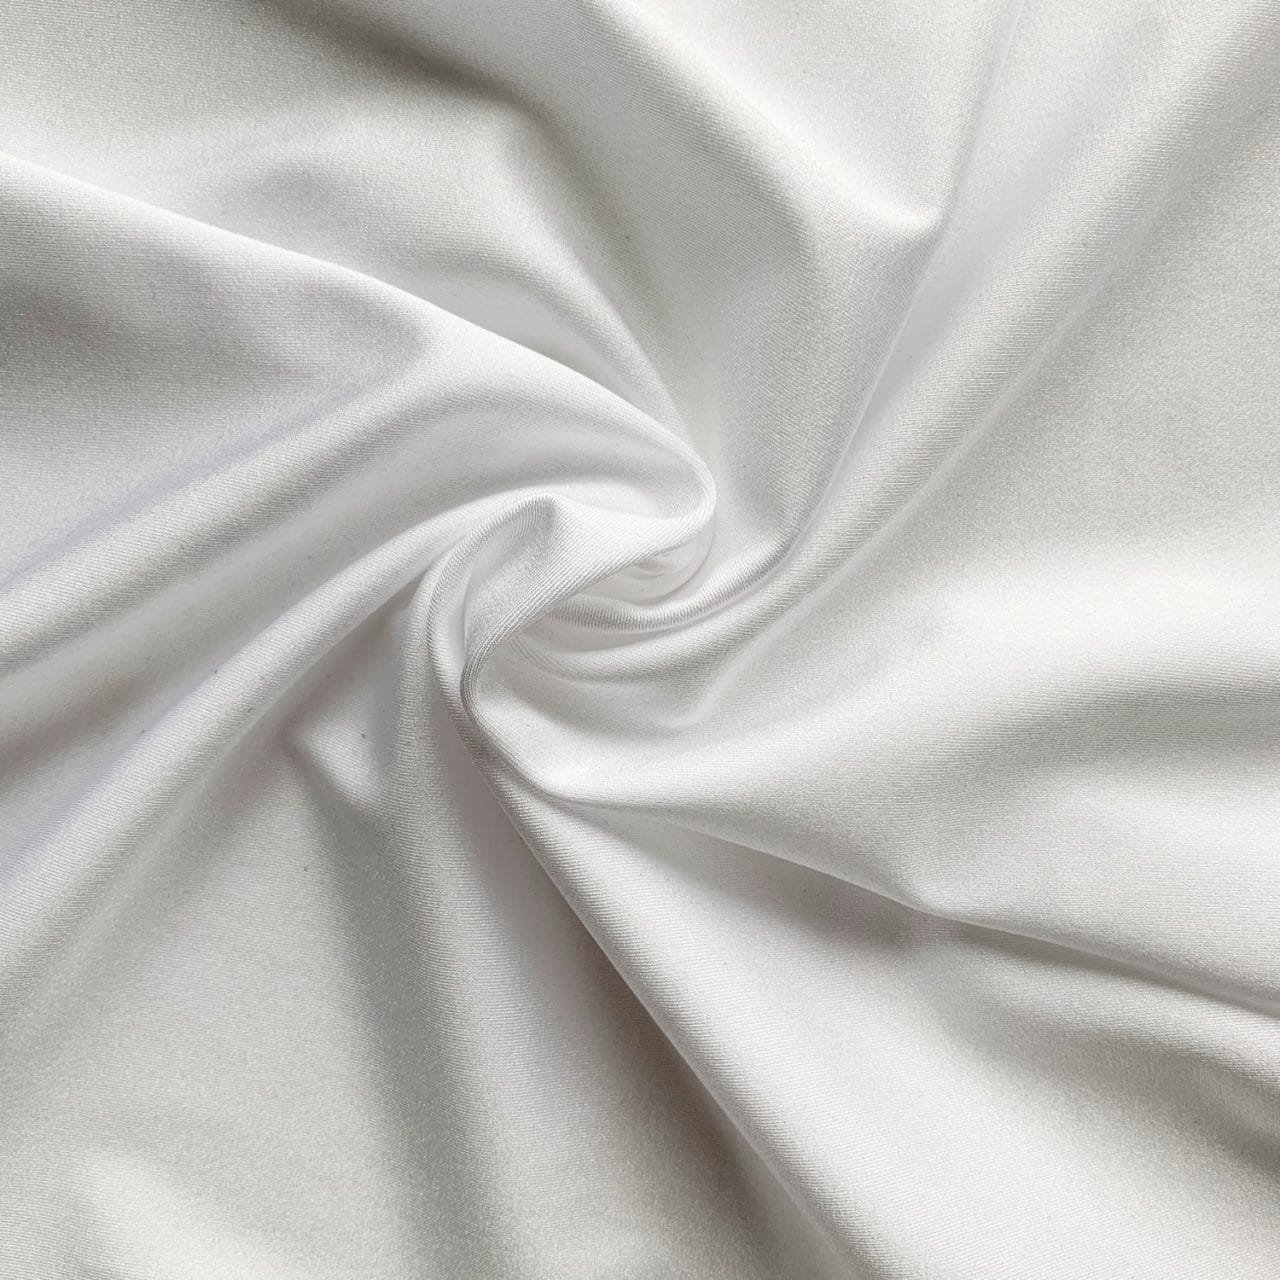 Carvico Shiny Nylon Spandex- Bianco (White)